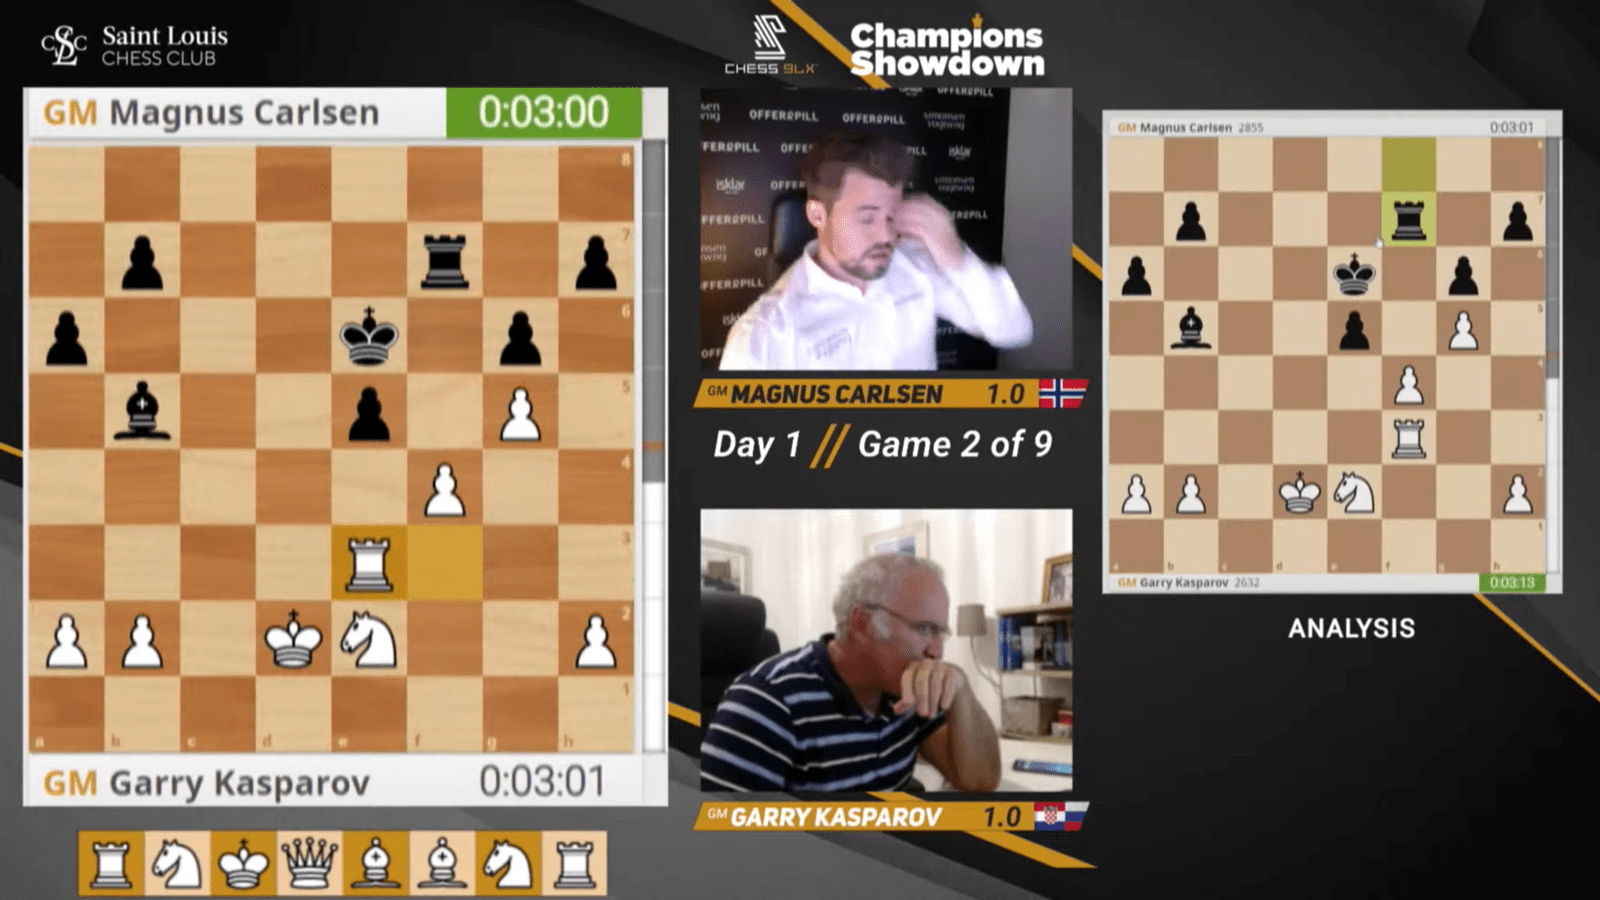 kasparov chess moves